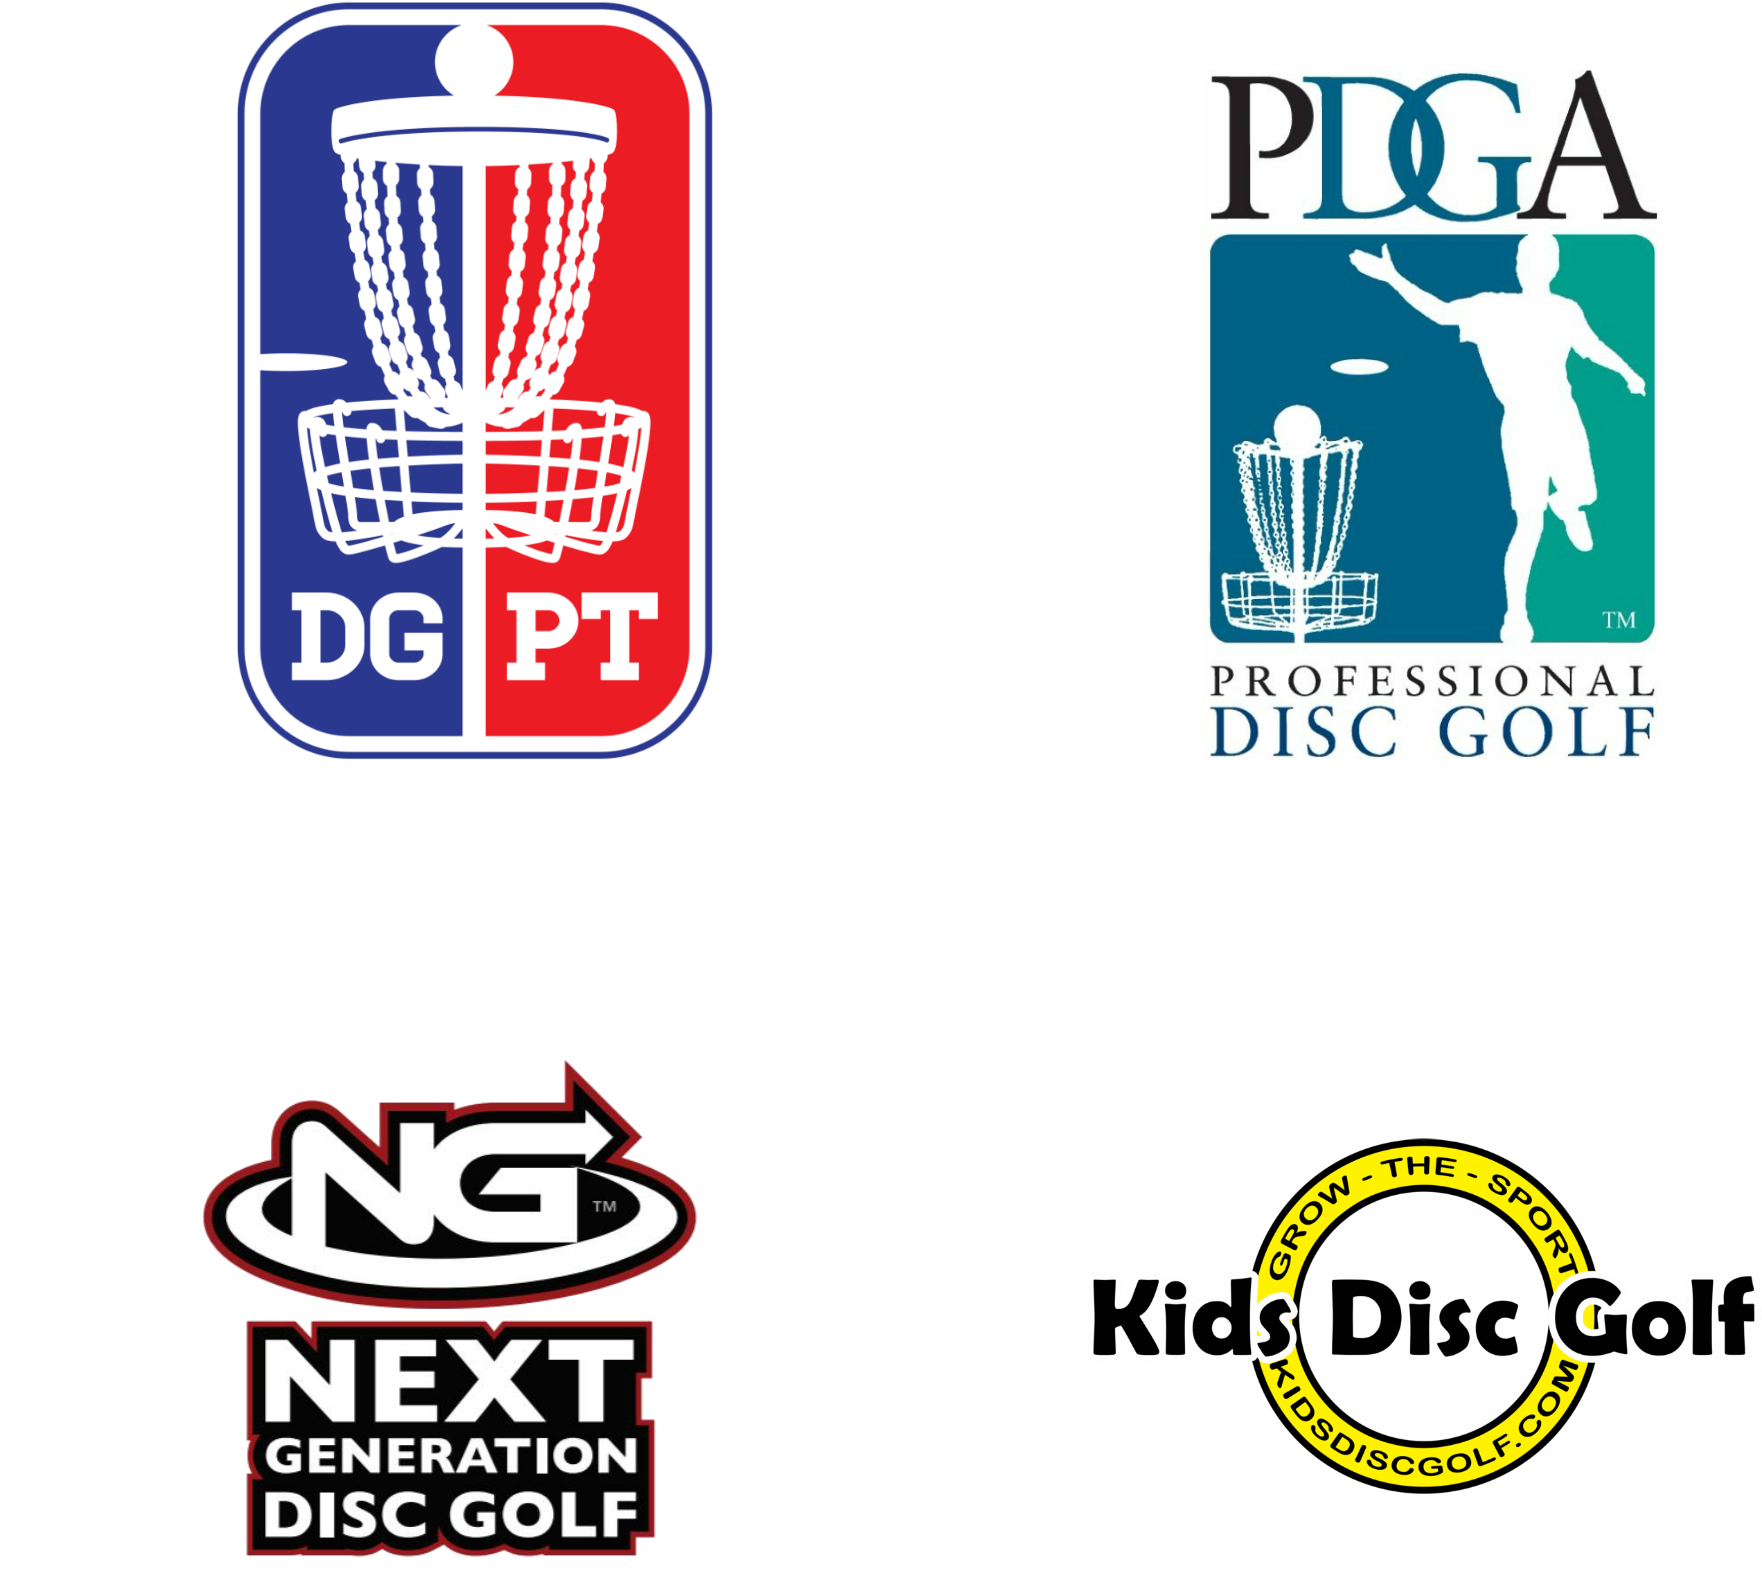 Professional Disc Golf Association (2000x2000)